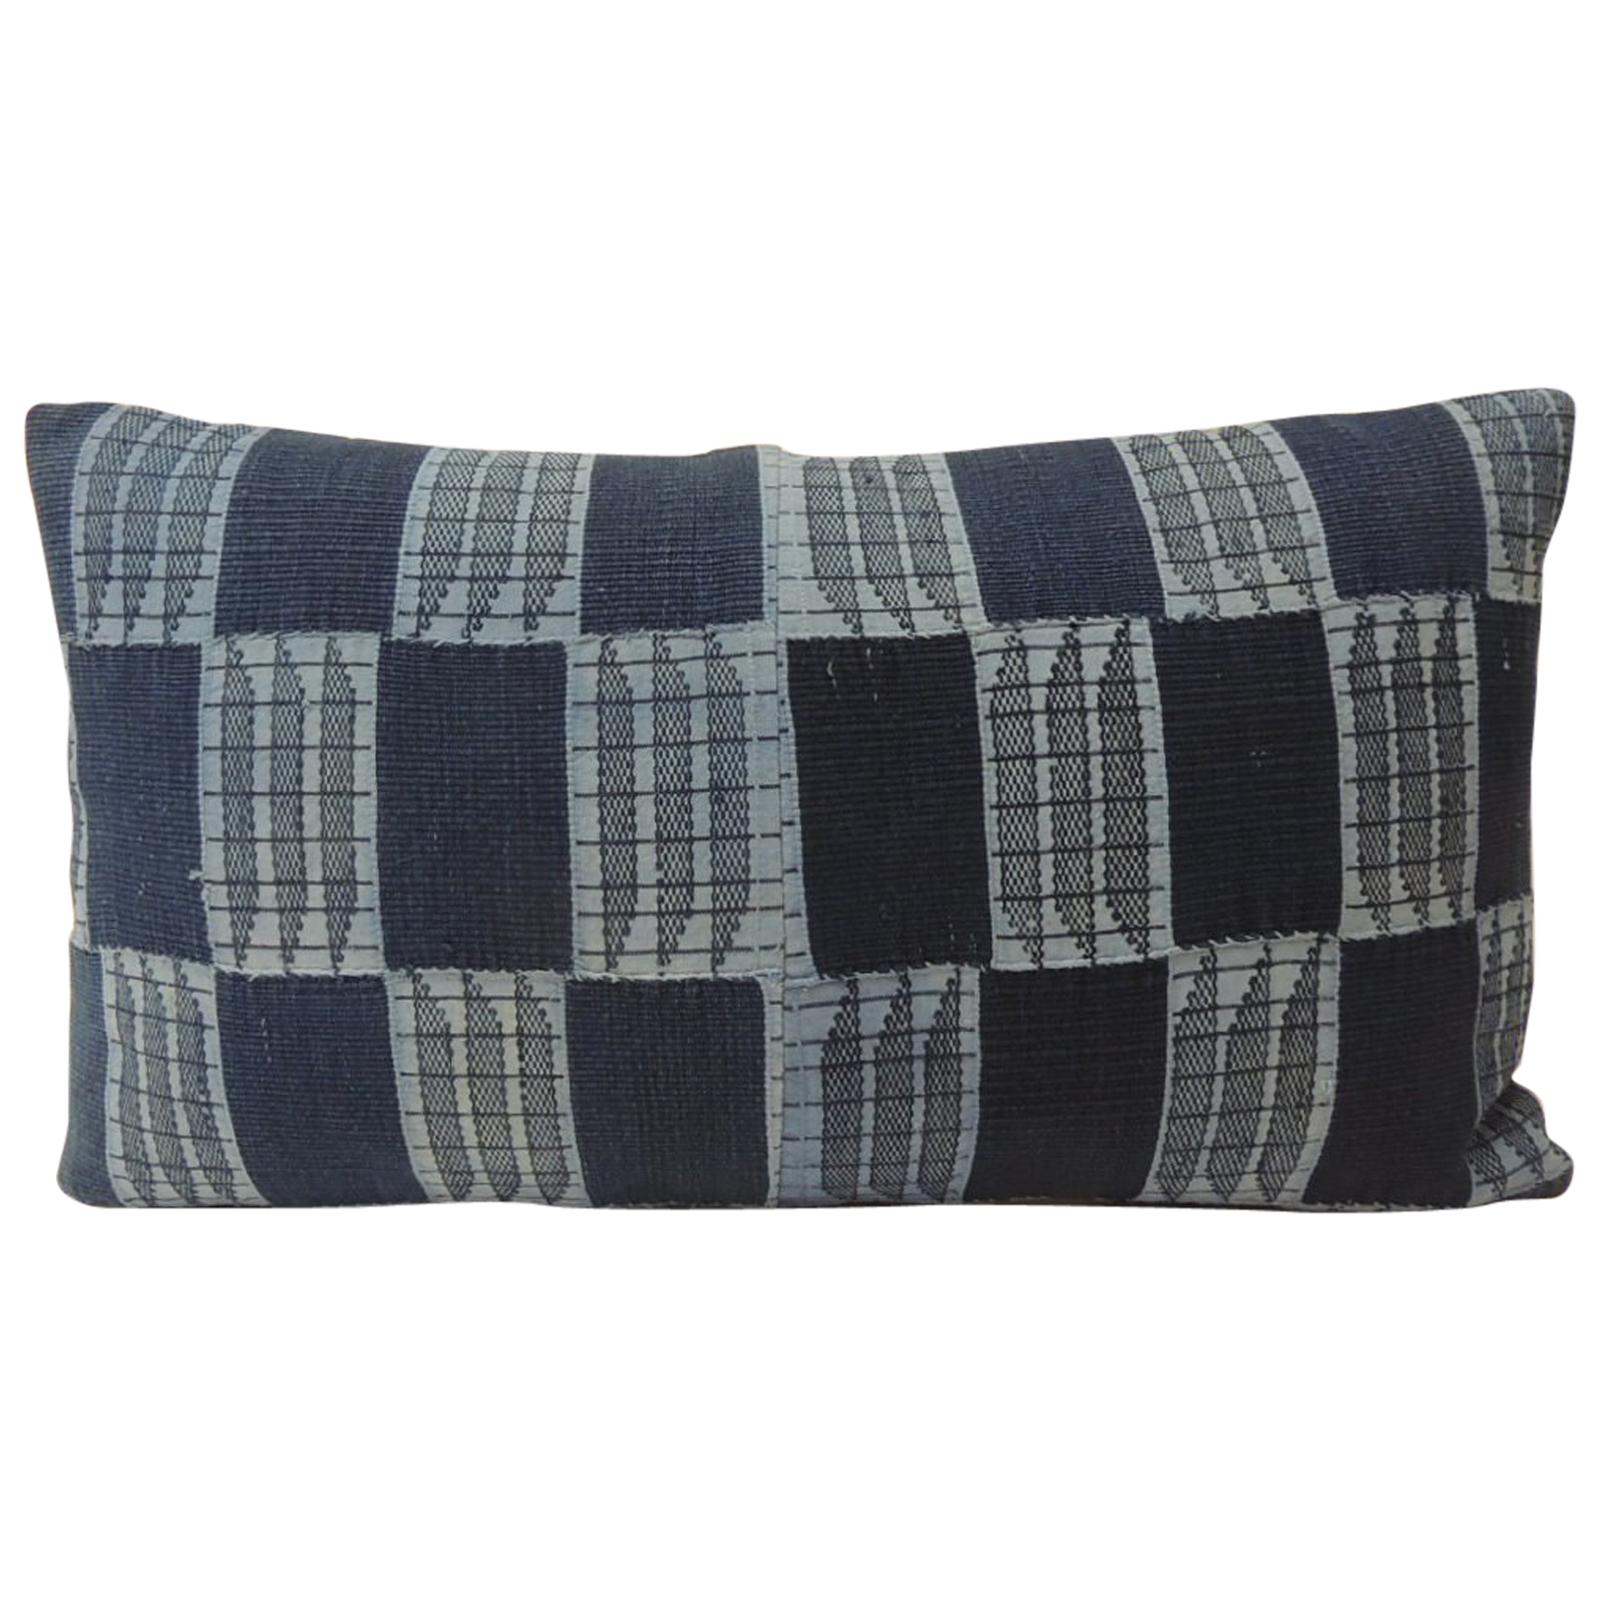 Vintage Indigo and Blue African Woven Pattern Decorative Lumbar Pillow